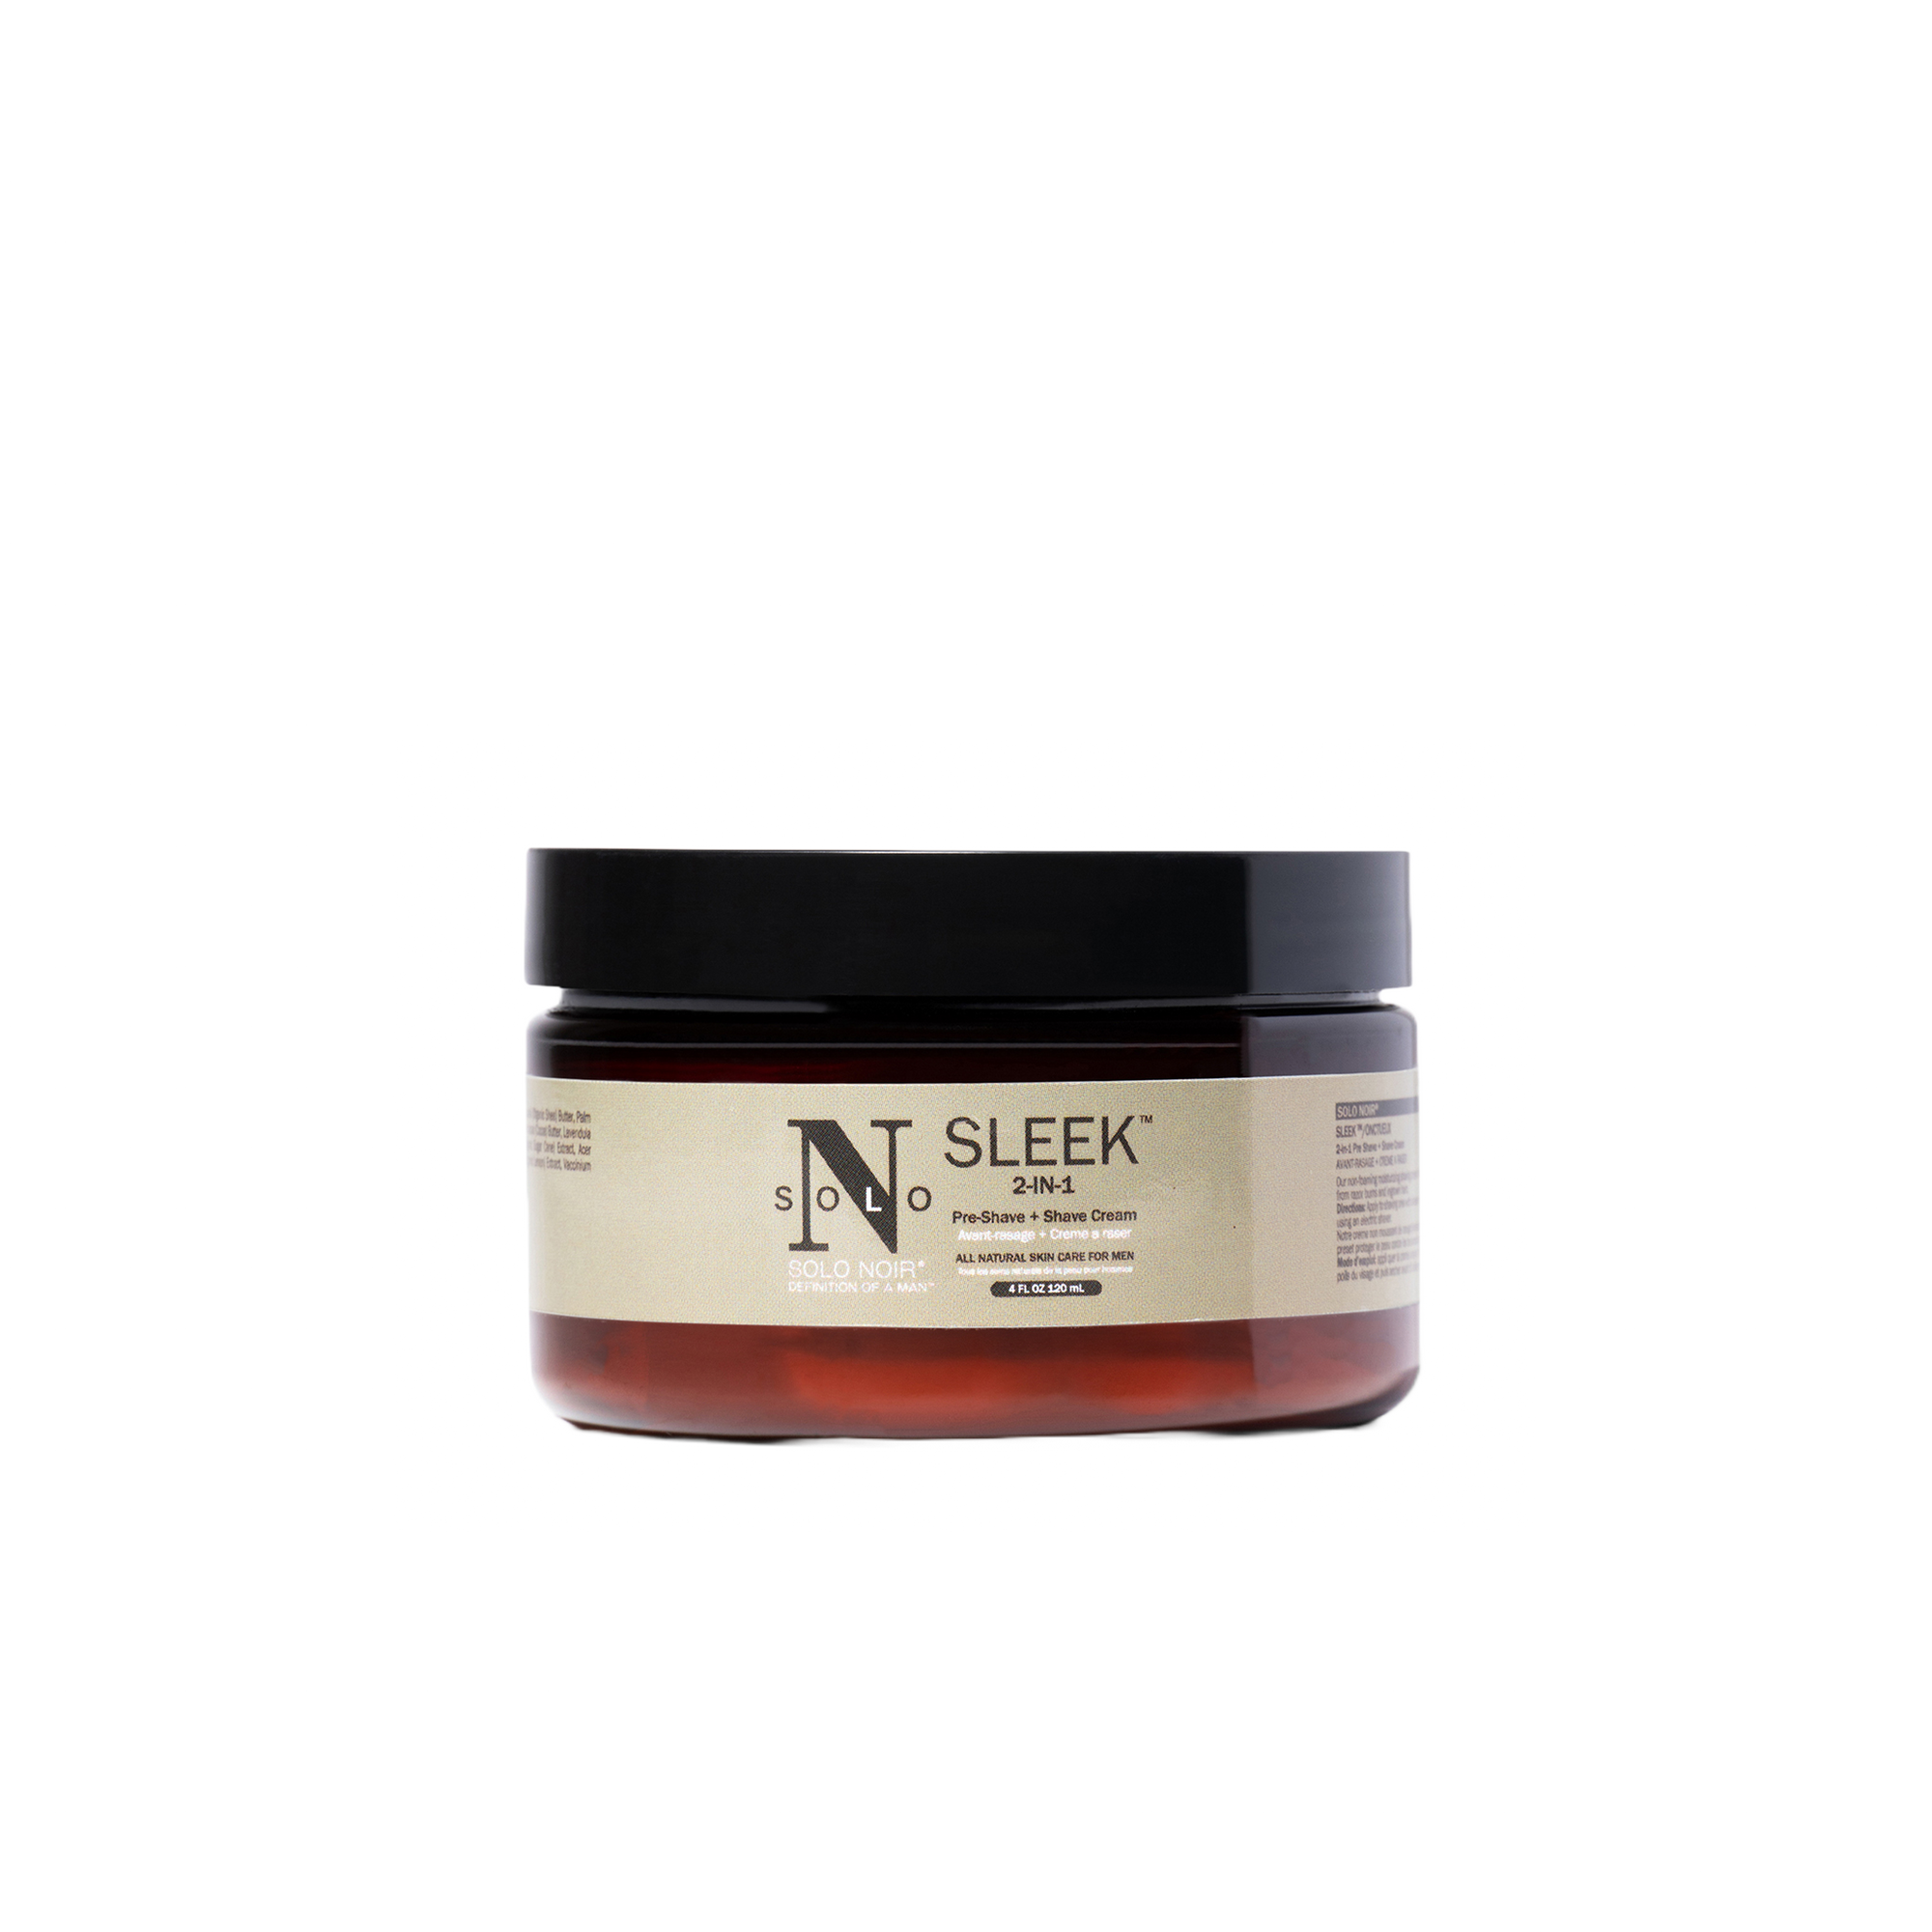 Solo Noir “Sleek™” Pre Shave + Shave Cream 4oz